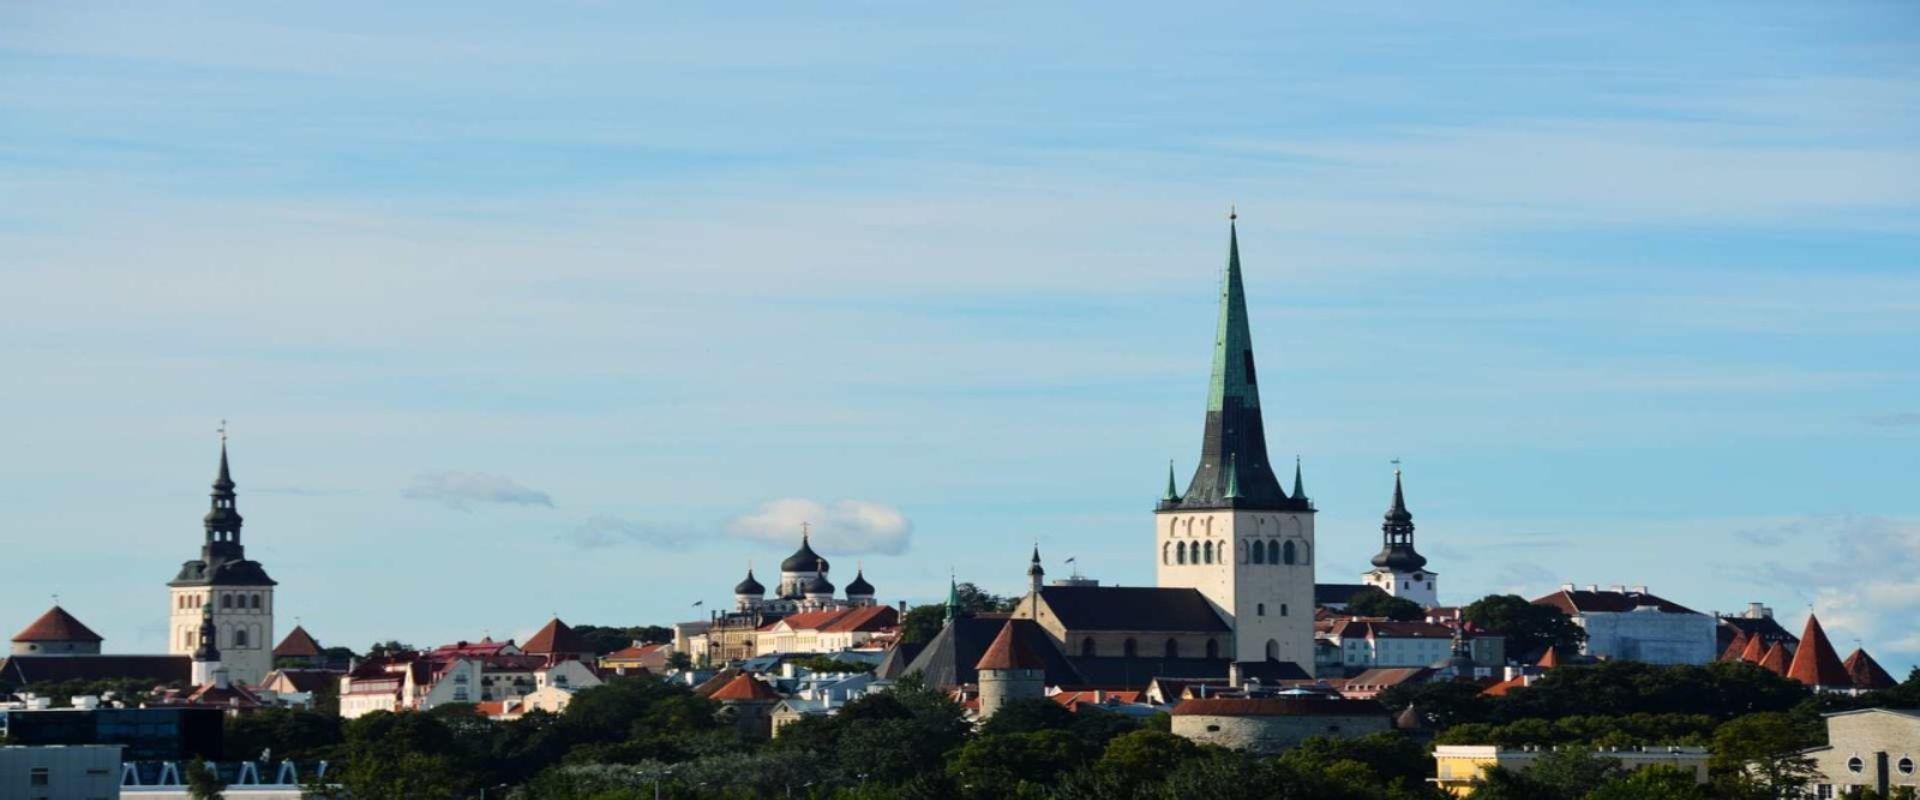 Beauties of Tallinn Private Tour